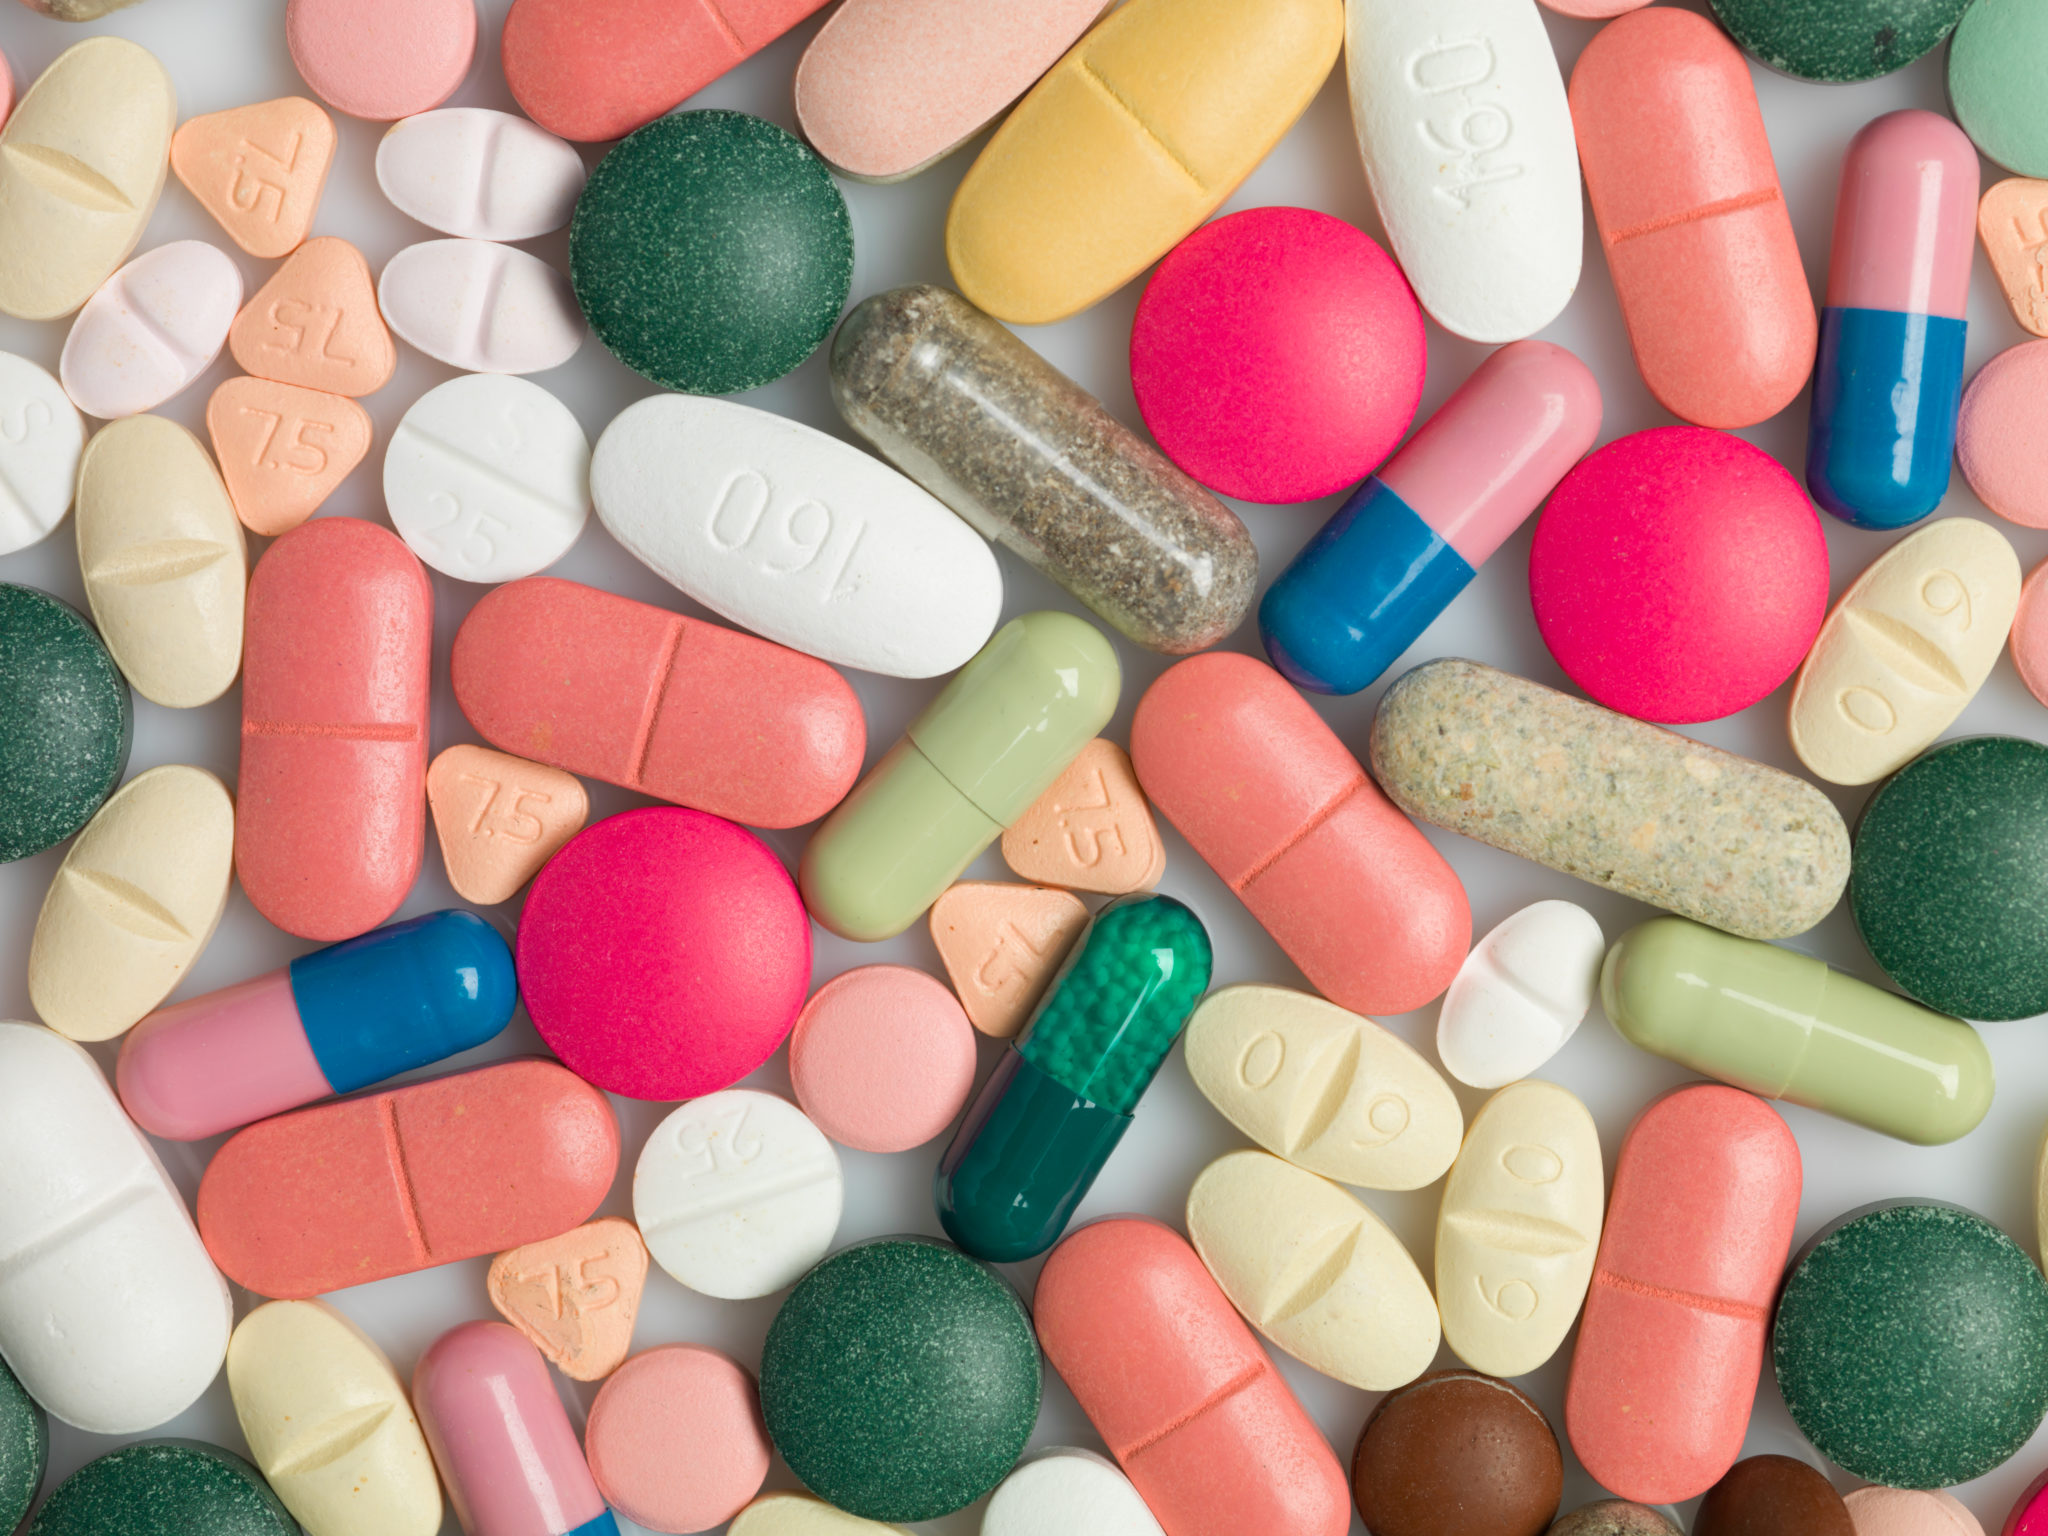 Как называется разноцветные таблетки. Разноцветные таблетки. Розовые таблетки. Драже лекарственная форма. Лекарственные формы картинки.